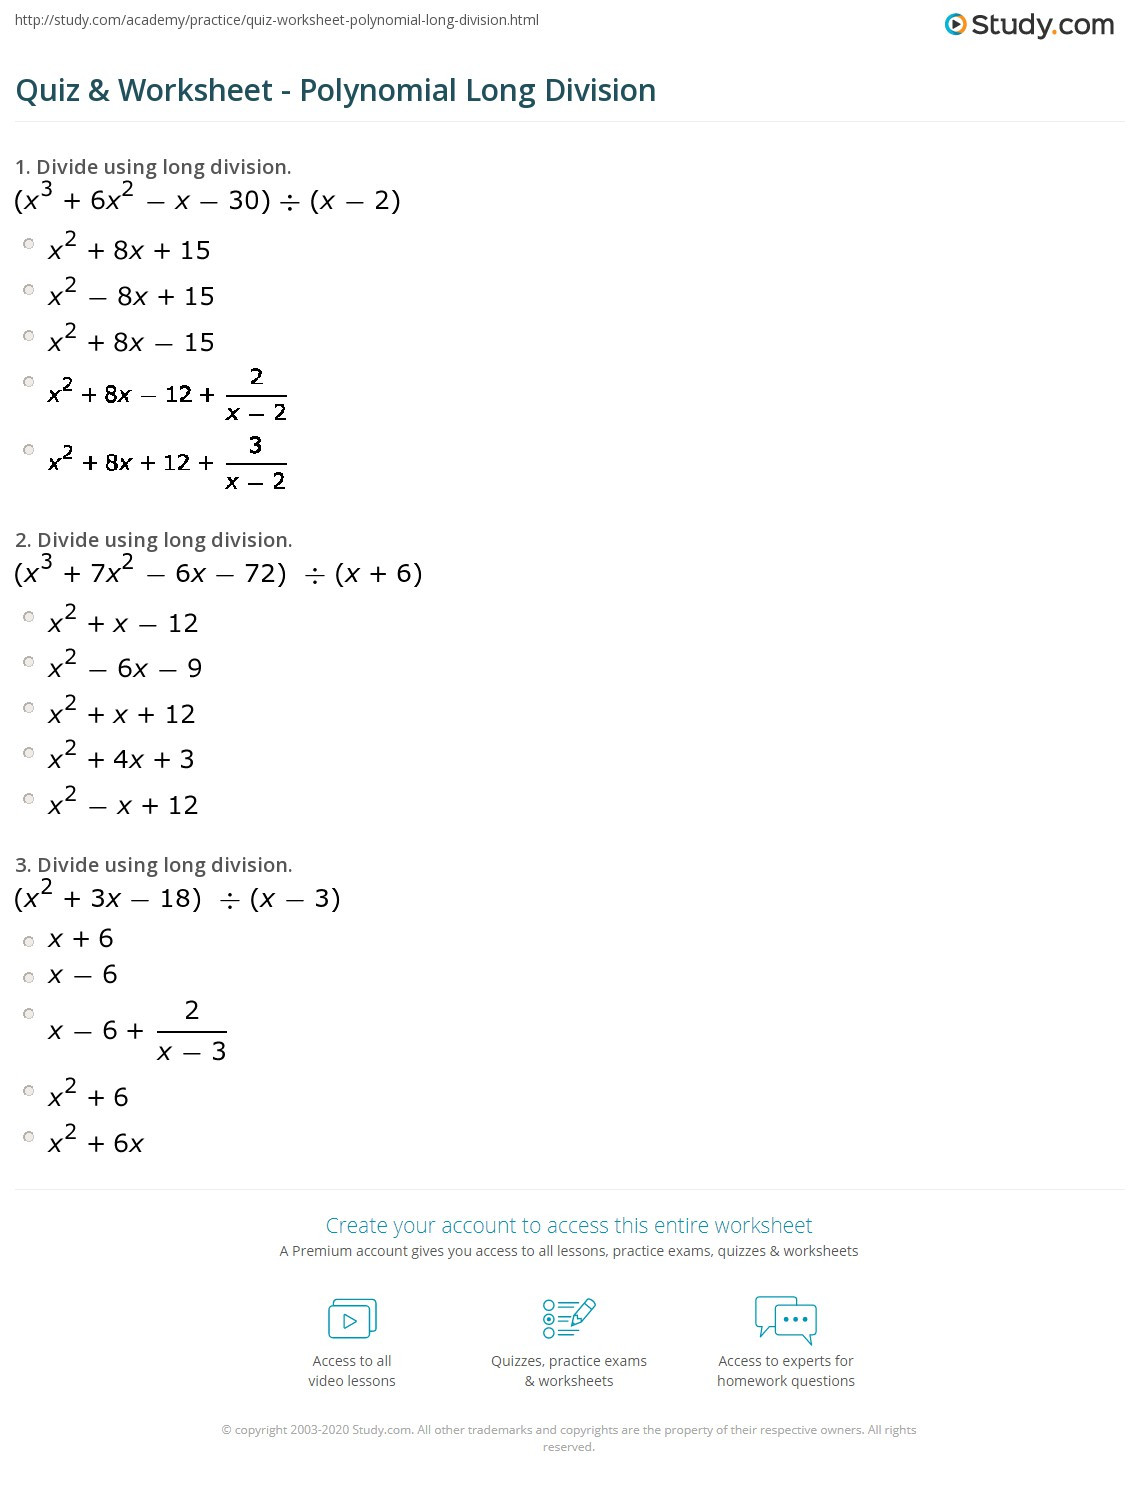 Long Division Polynomials Worksheet Quiz &amp; Worksheet Polynomial Long Division